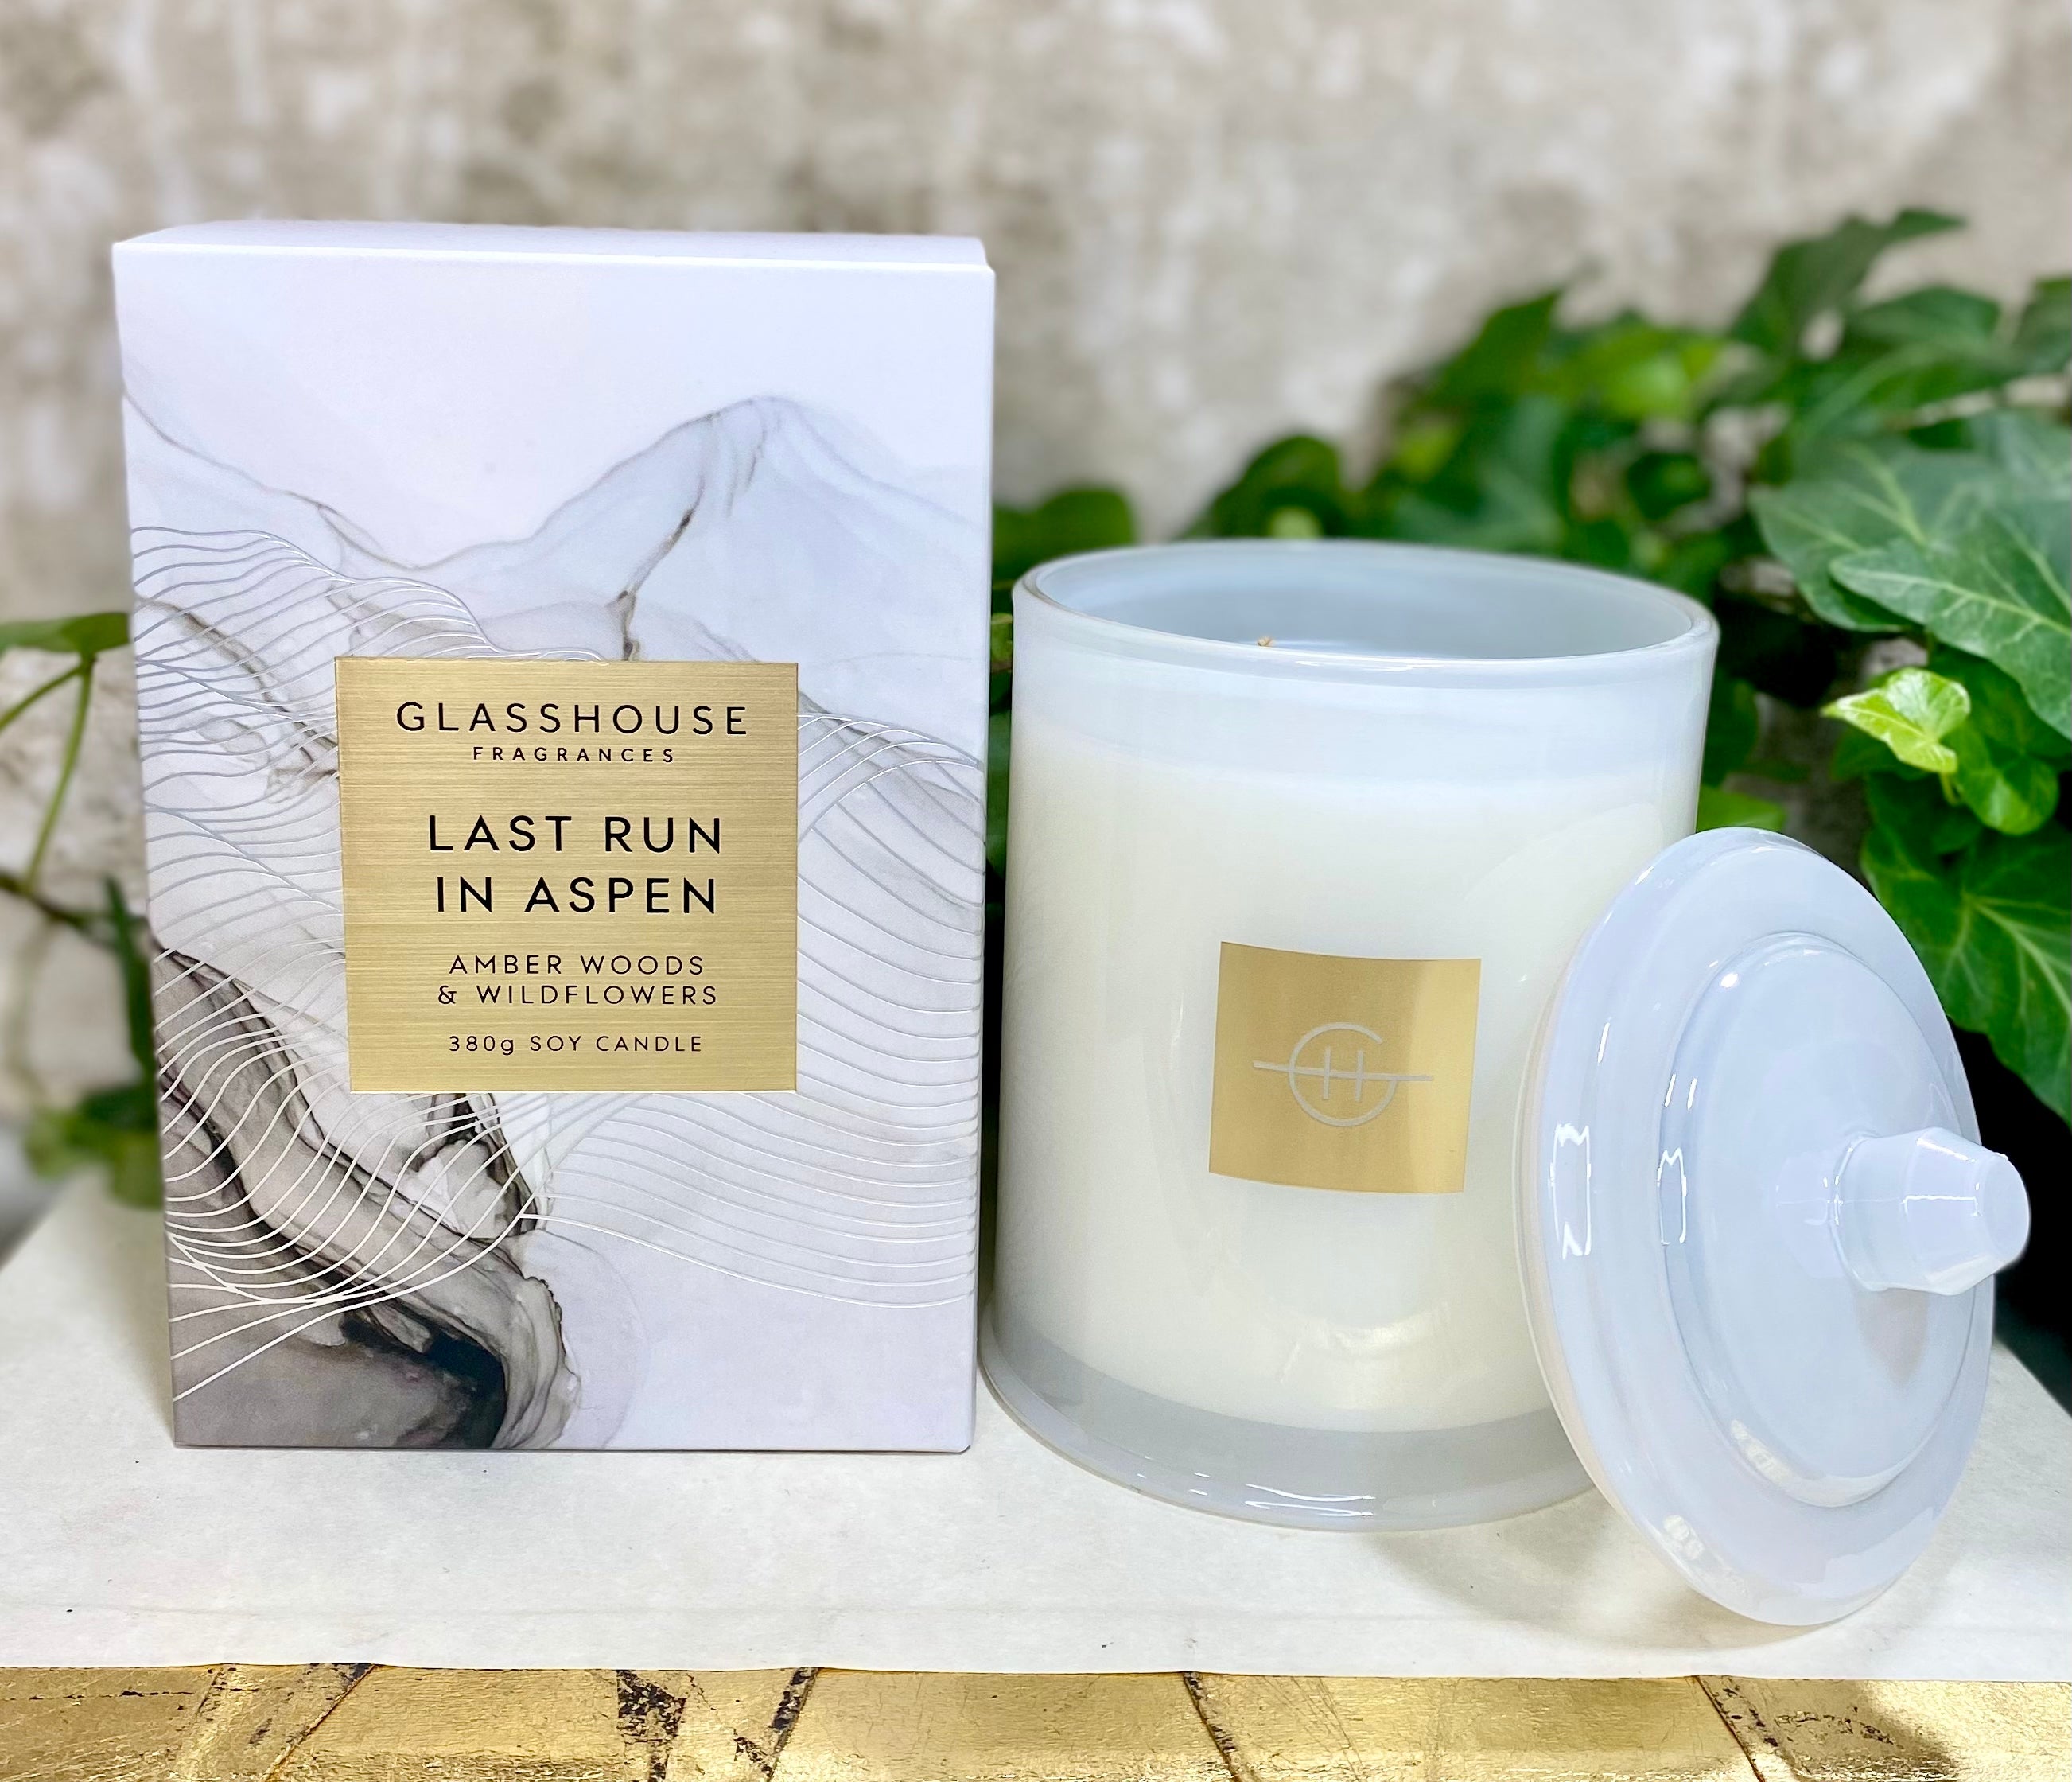 Glasshouse “Last Run in Aspen” candle 13.4 oz